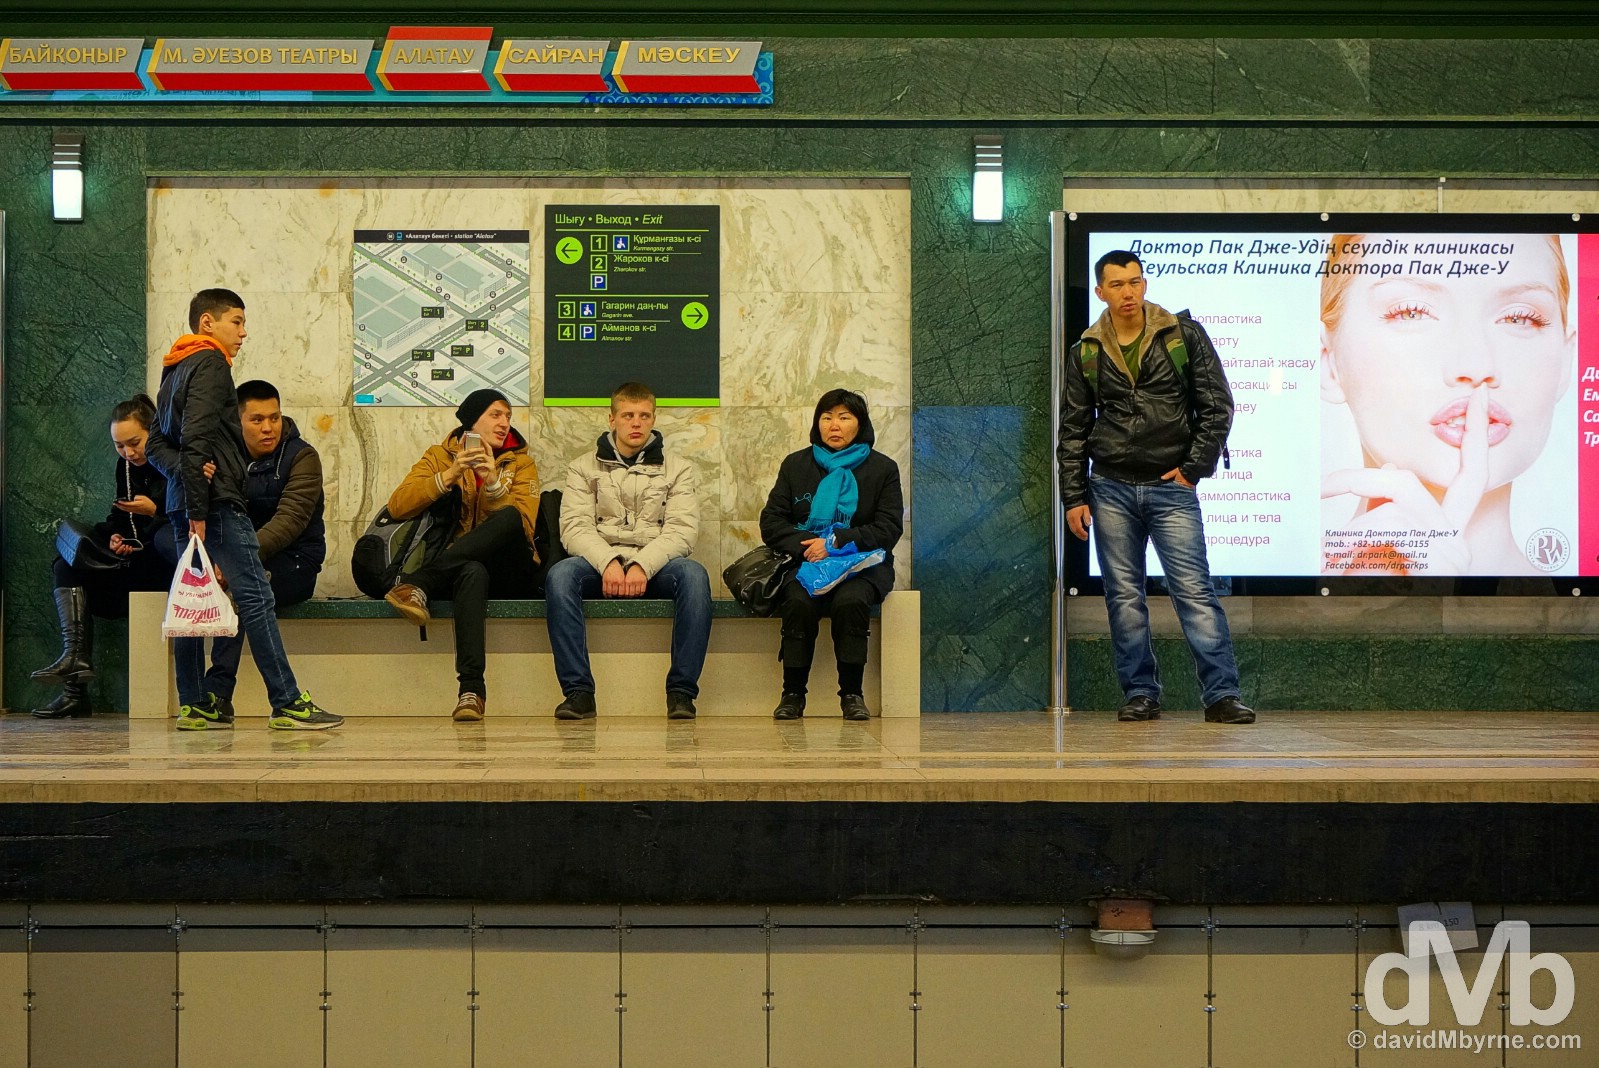 Waiting on the platform of Alatau Metro Station in Almaty, Kazakhstan. February 21, 2015.